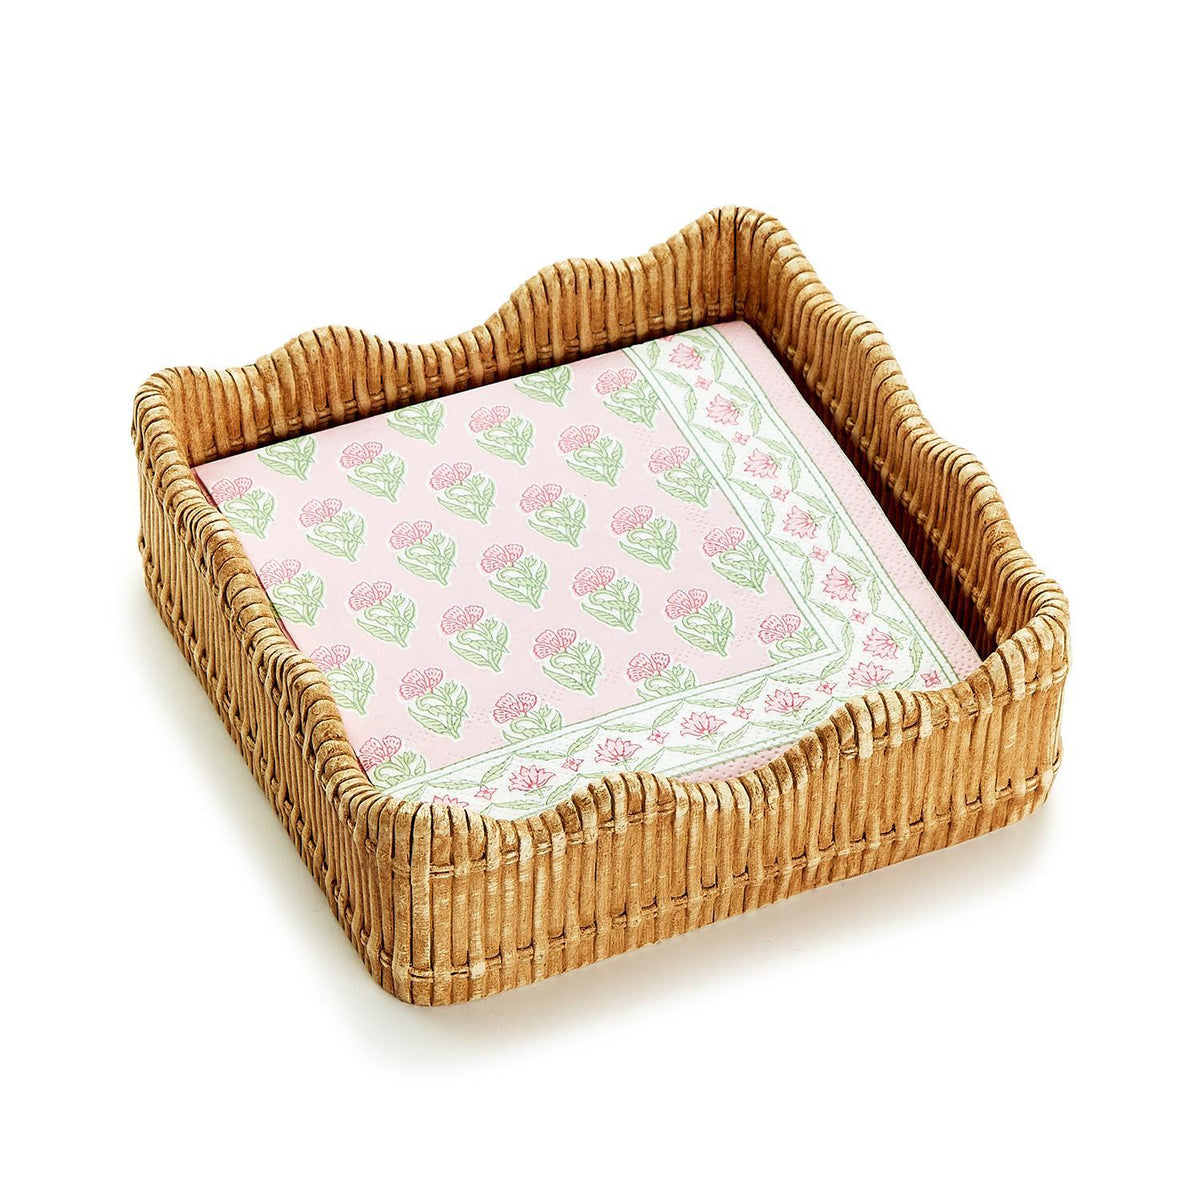 Scalloped Edge Basket Weave Pattern Cocktail Napkin Holder - The Preppy Bunny